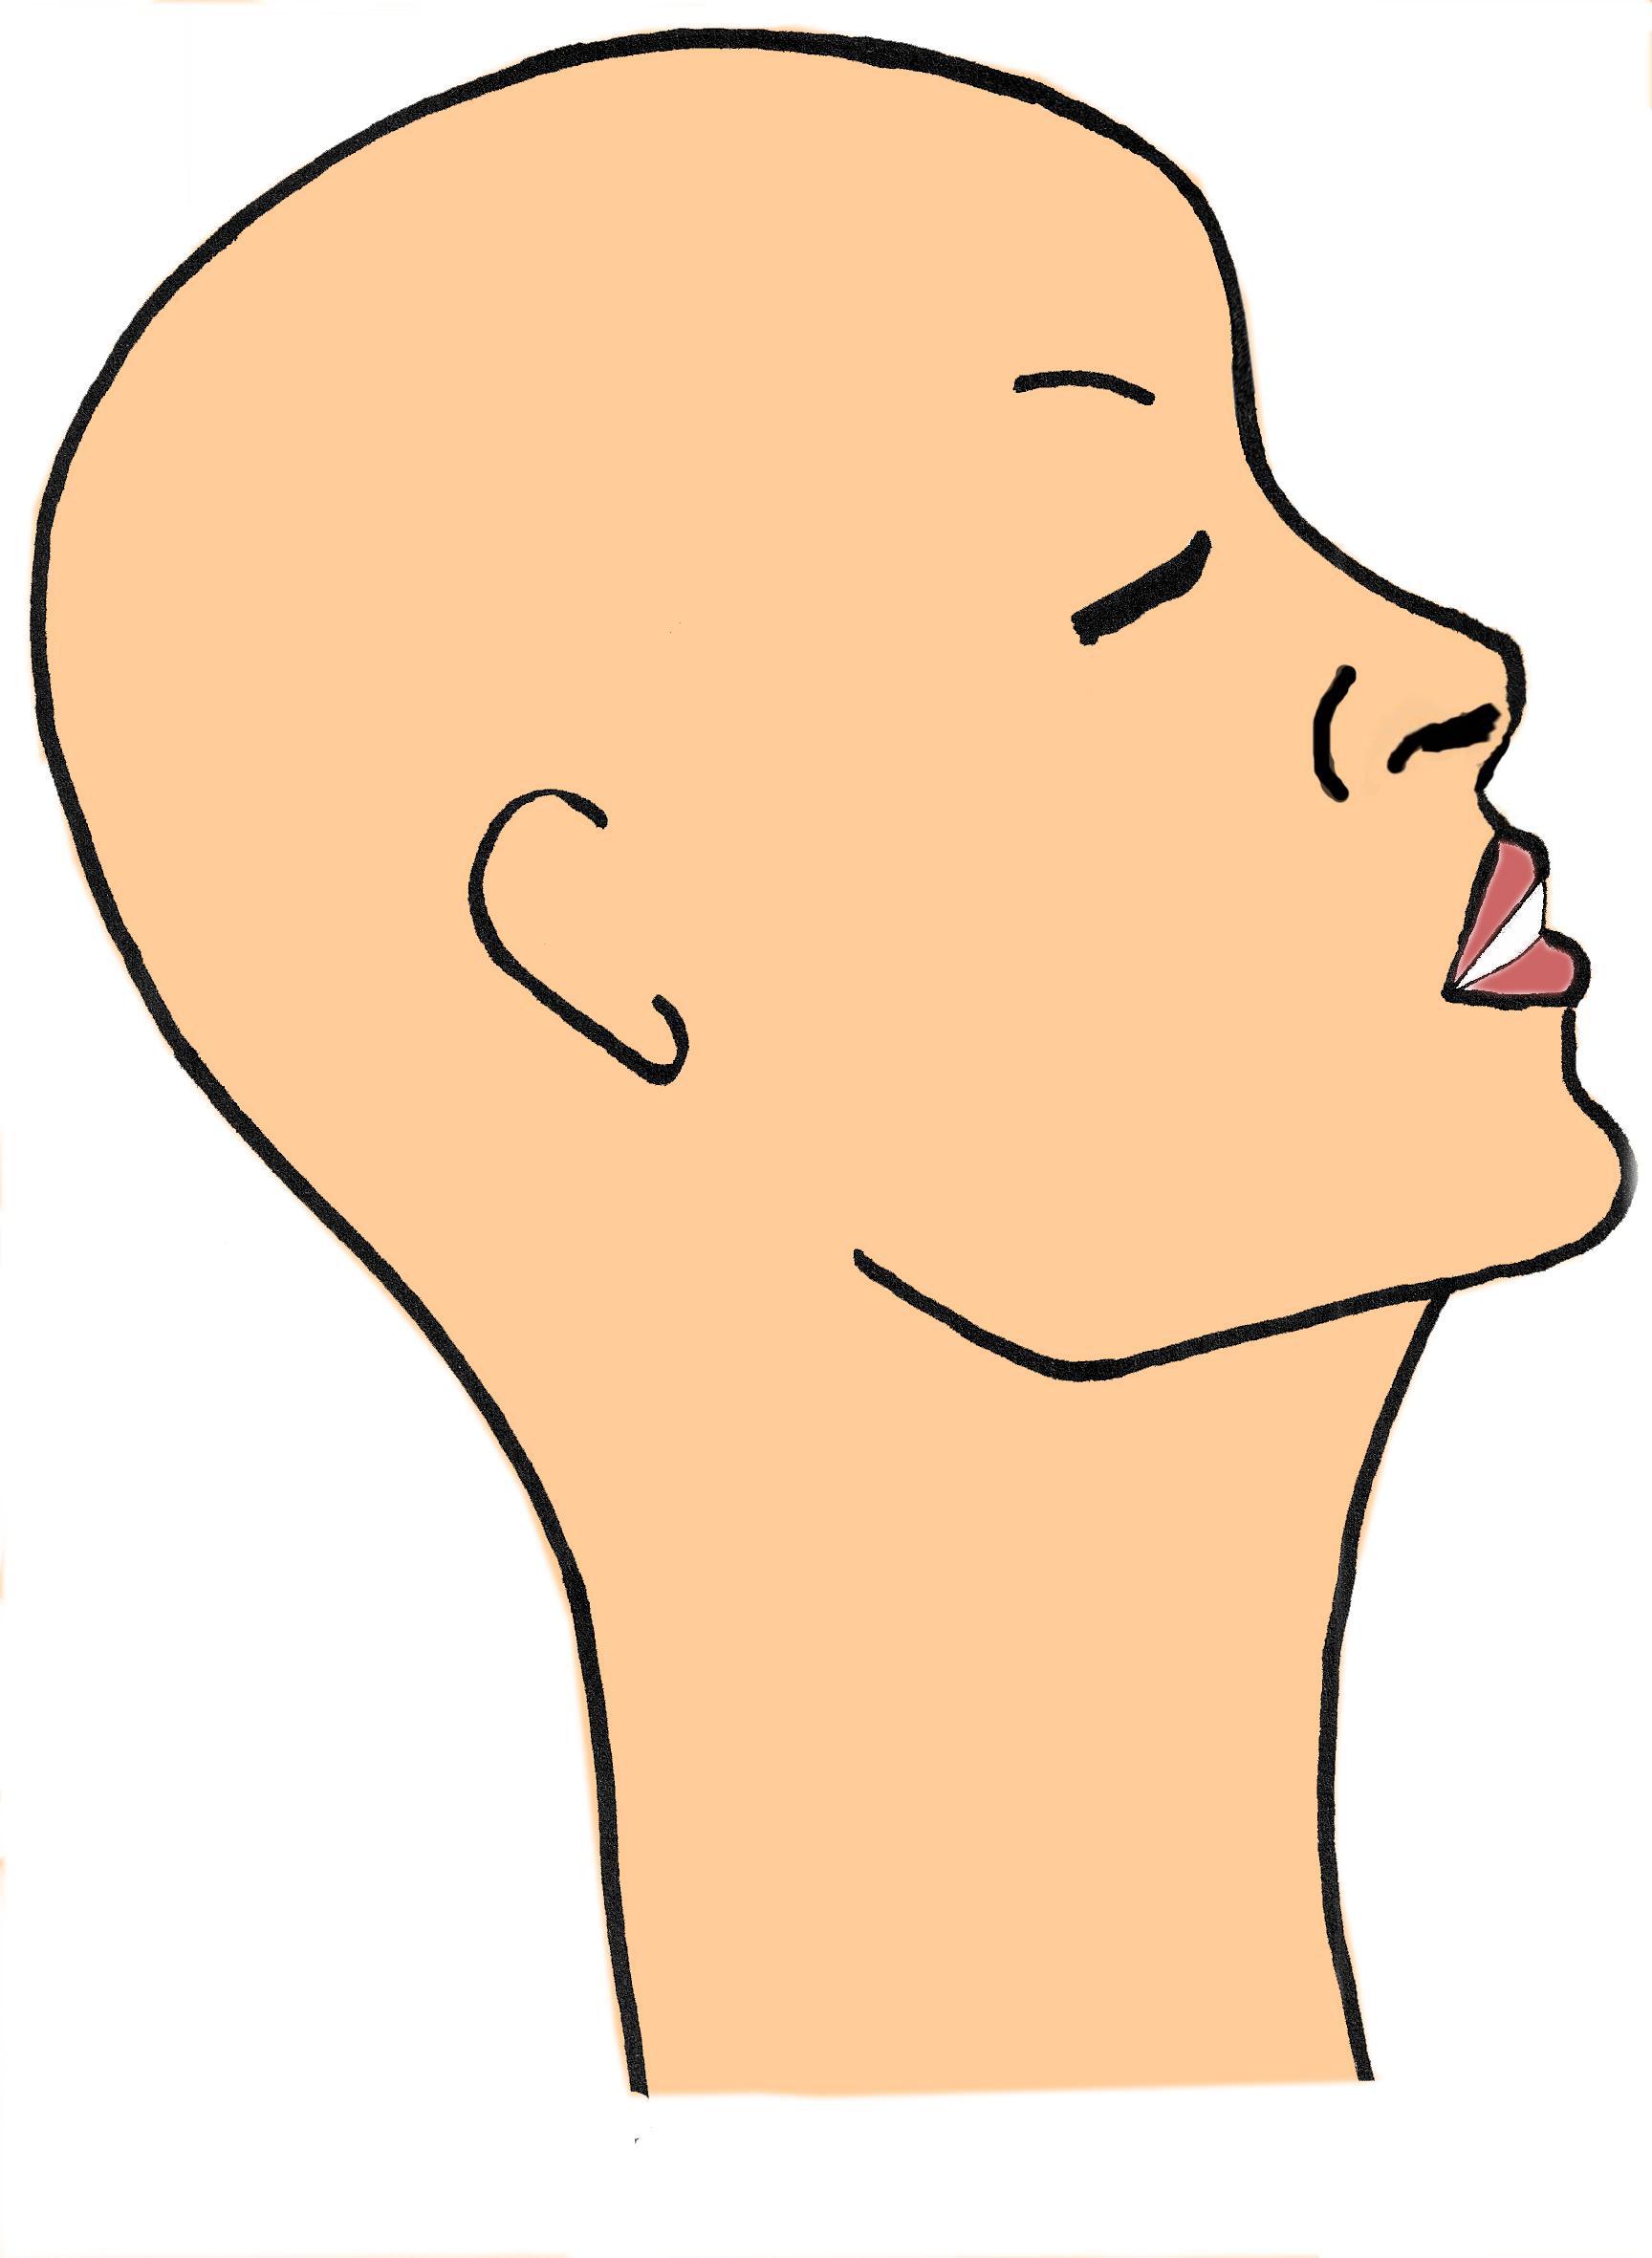 columelle-pendante-rhinoplastie-chirurgie-esthetique-nez